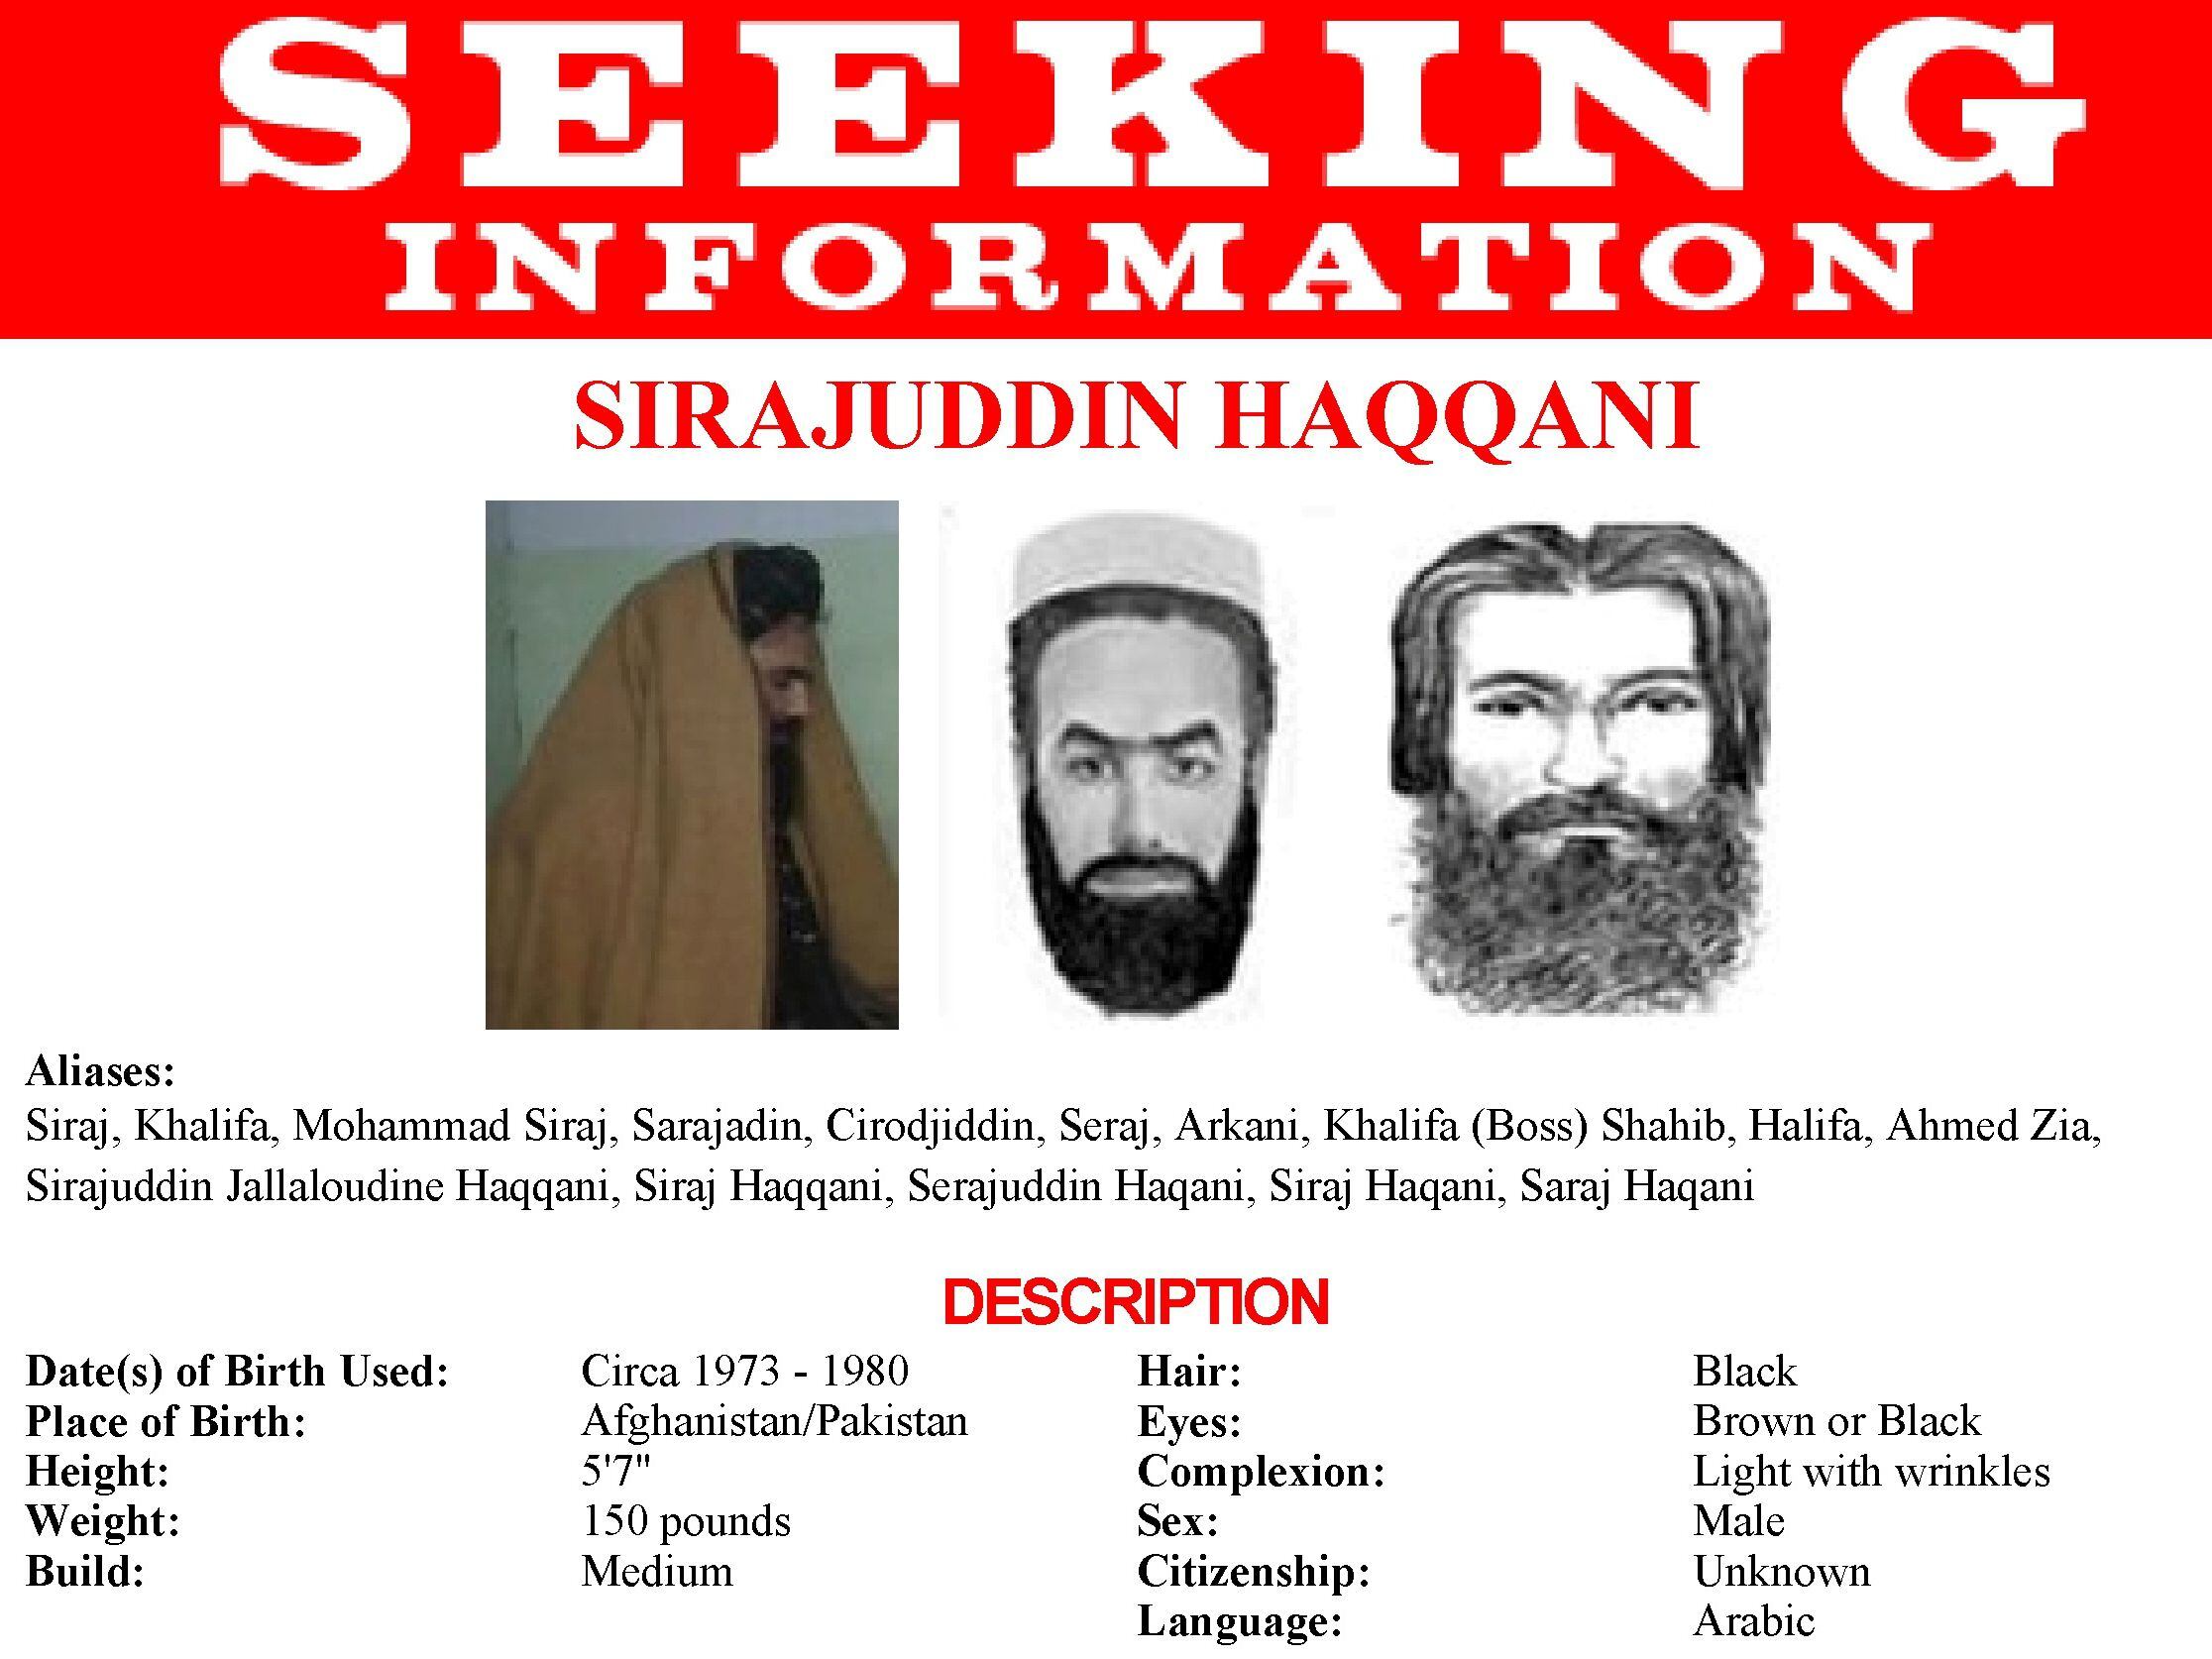 Cartaz do FBI com fotos sem data de Sirajuddin Haqqani.